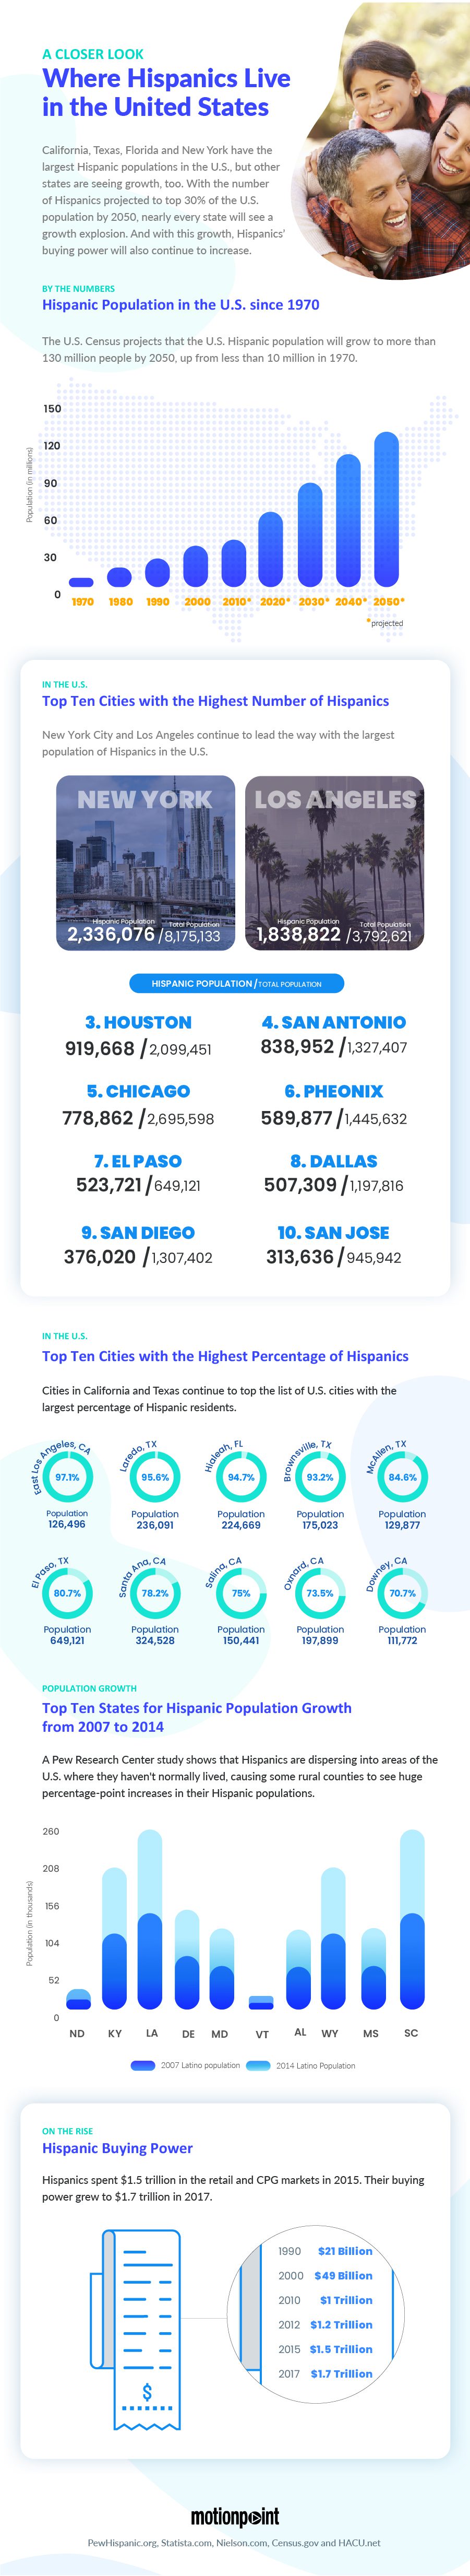 Where Hispanics Live in the United States